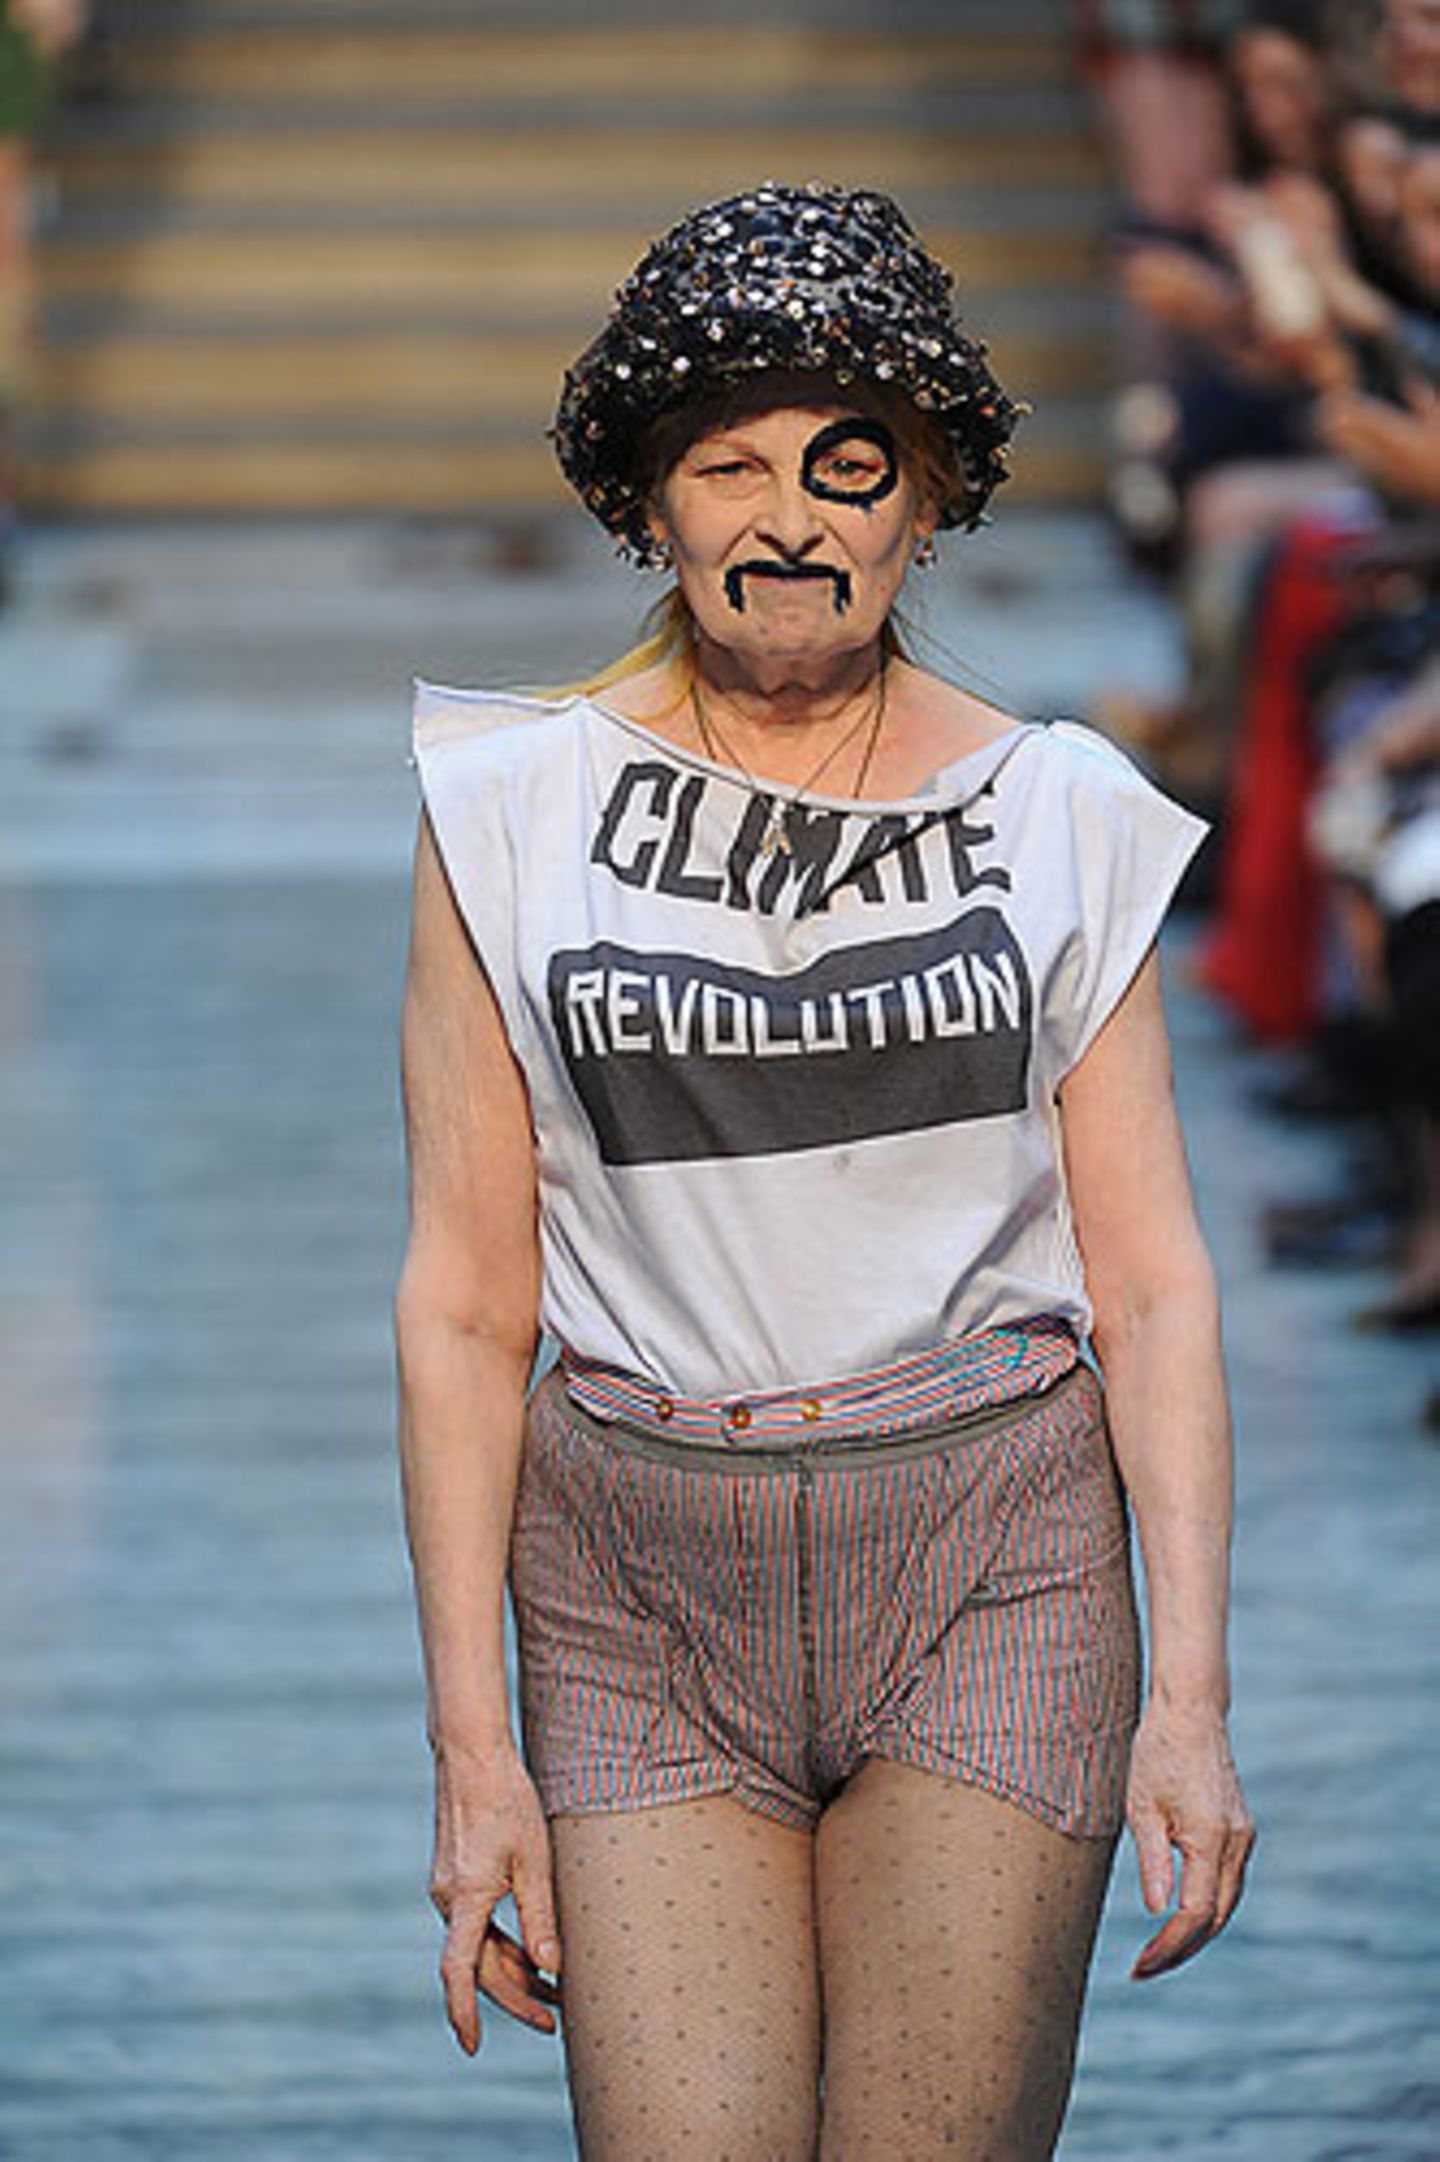 "Climate Revolution!"